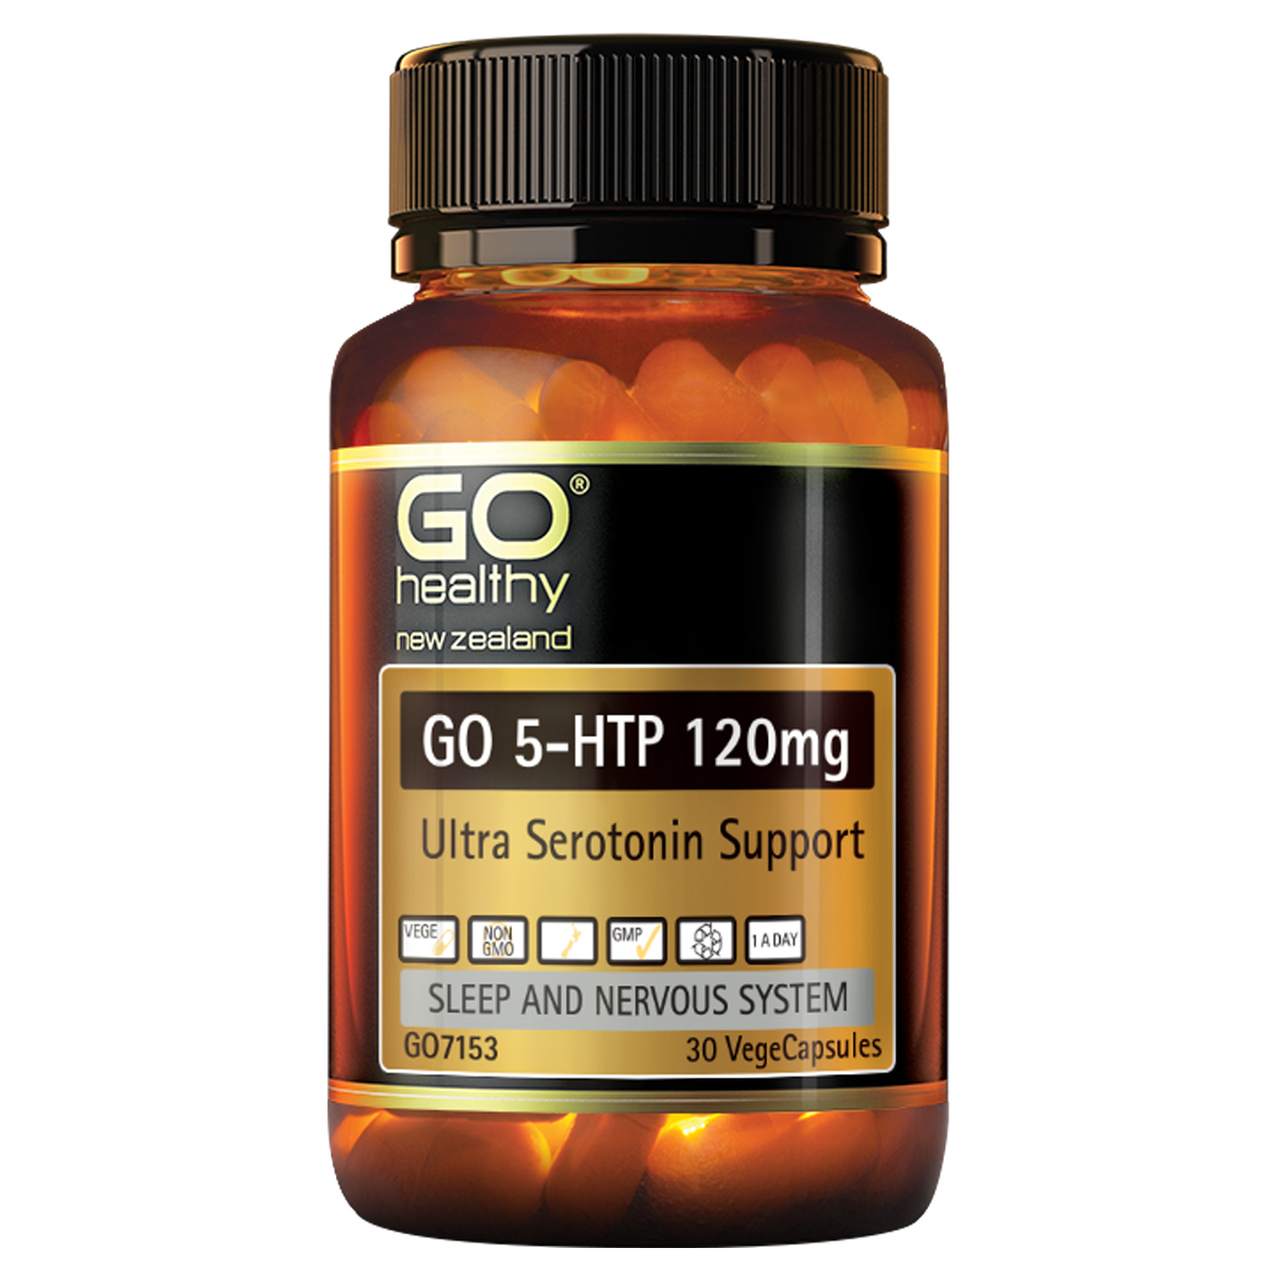 GO HEALTHY Go 5-HTP Ultra Serotonin Support 120mg